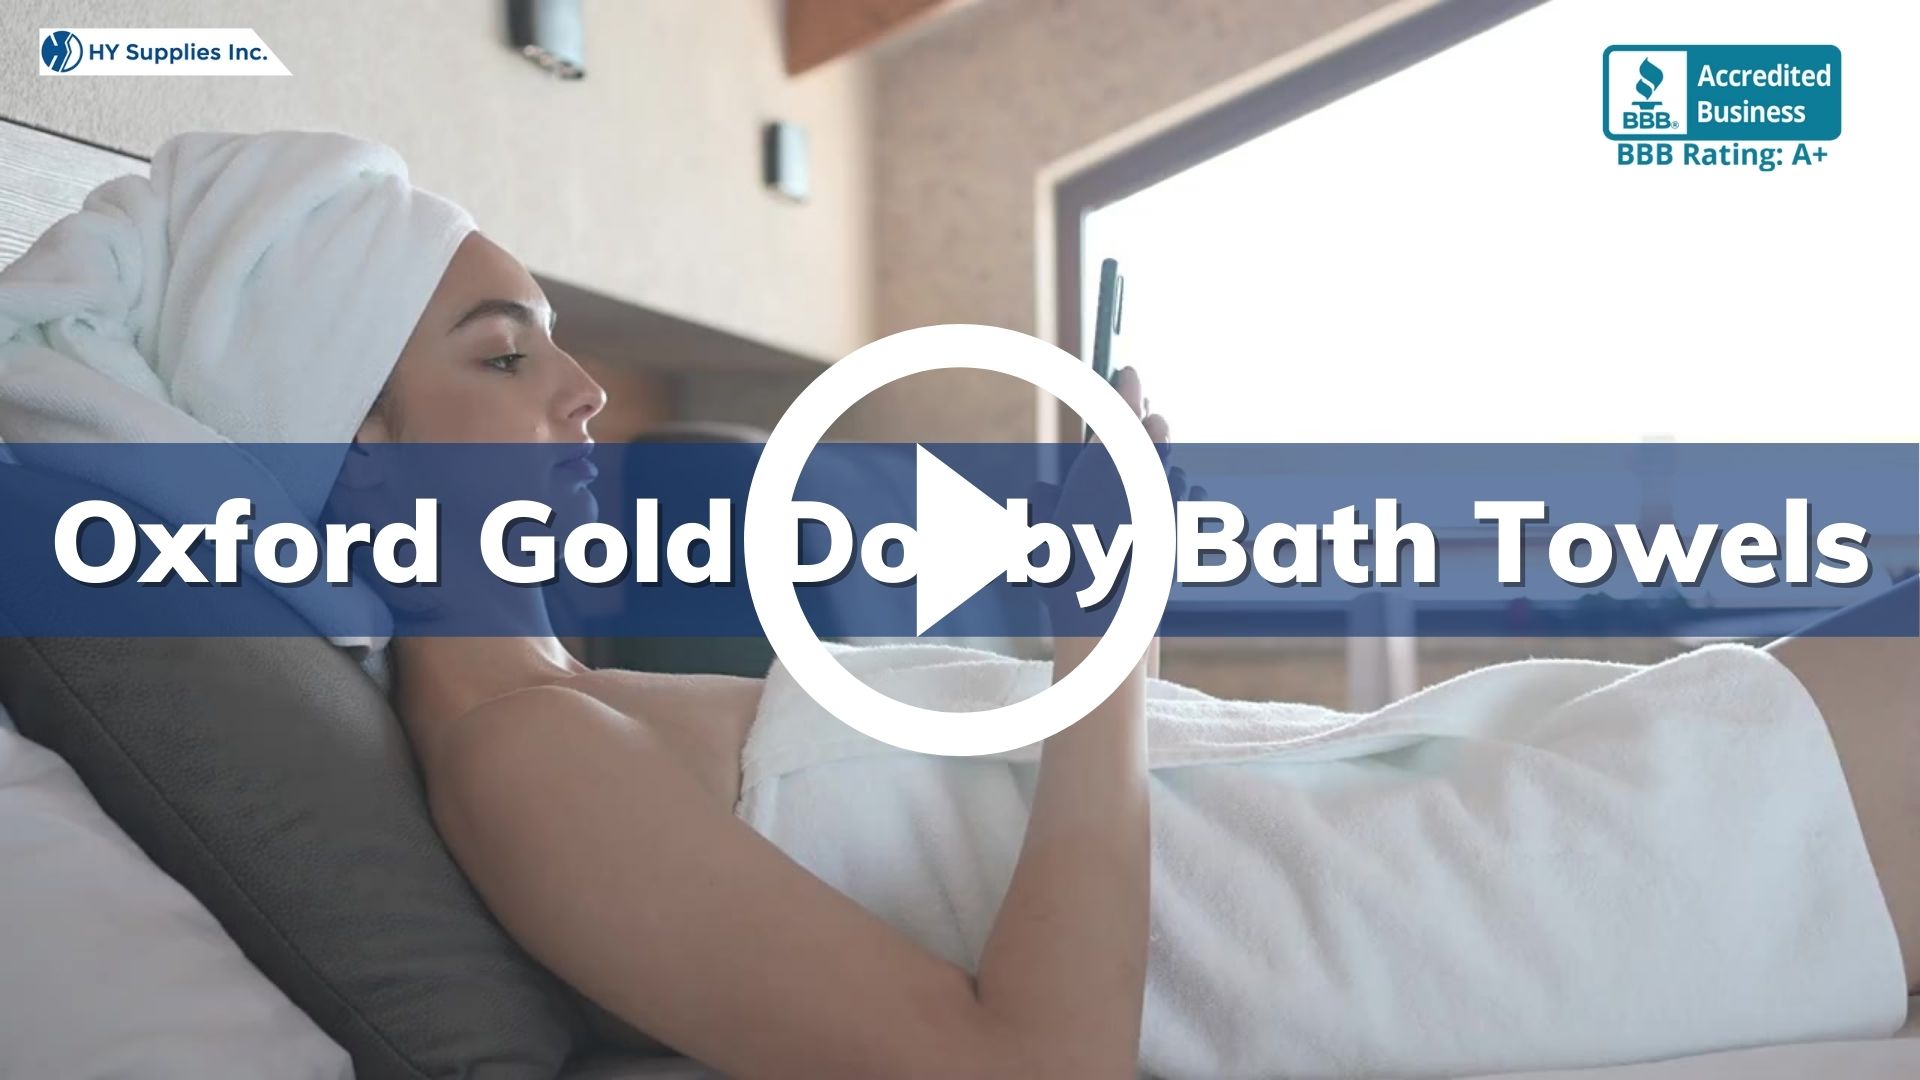 Oxford Gold Dobby Bath Towels